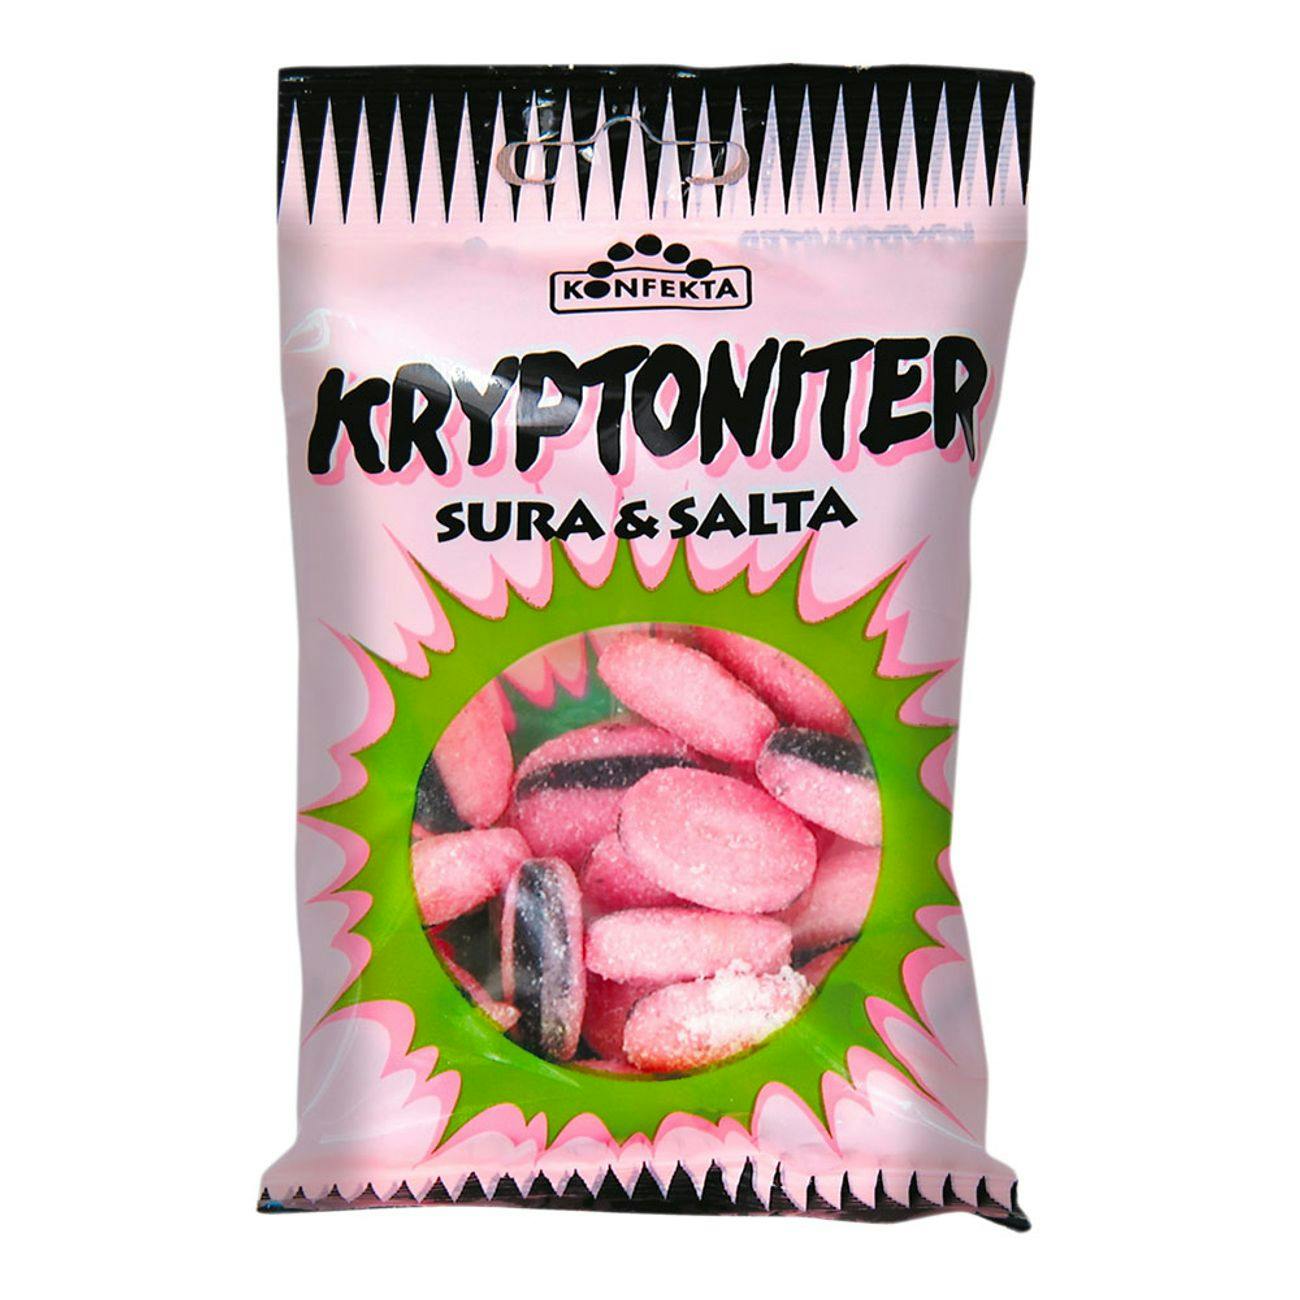 Konfekta Kryptoniter by Swedish Candy Store